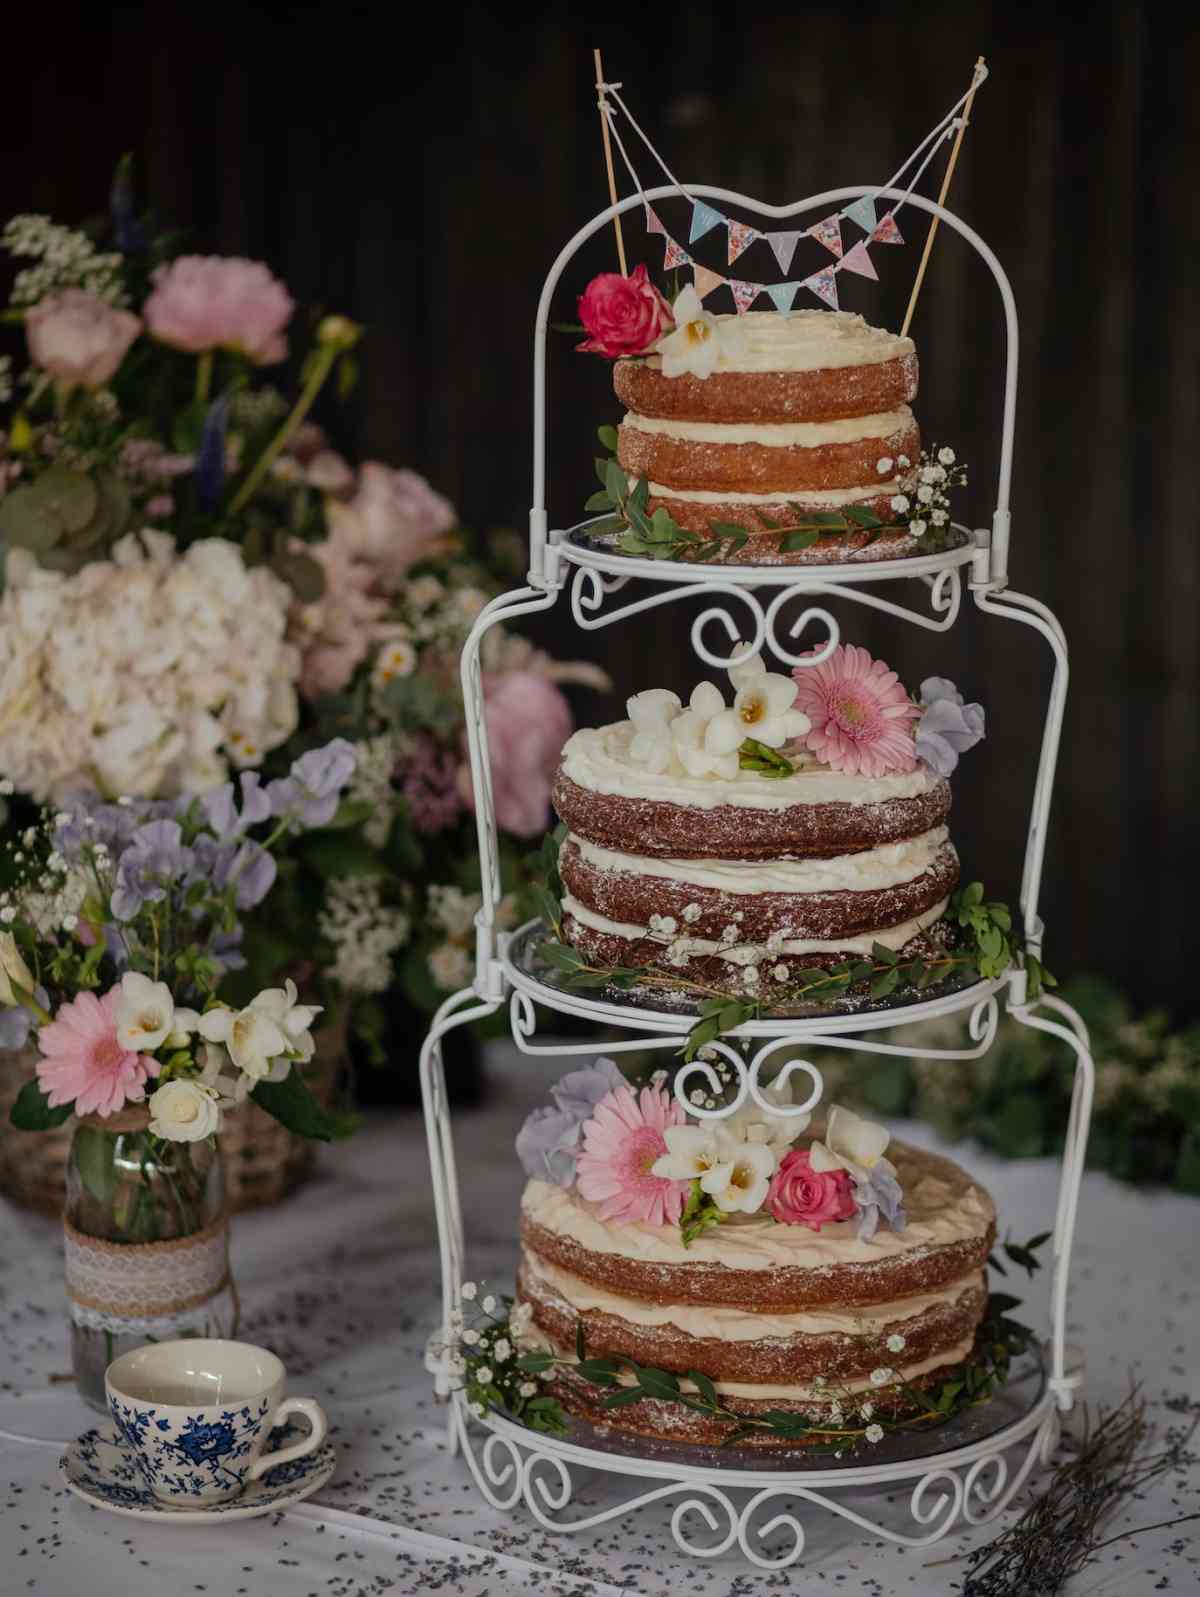 Elige el pastel desnudo "naked cake" ideal para tu espectacular boda de otoño 1